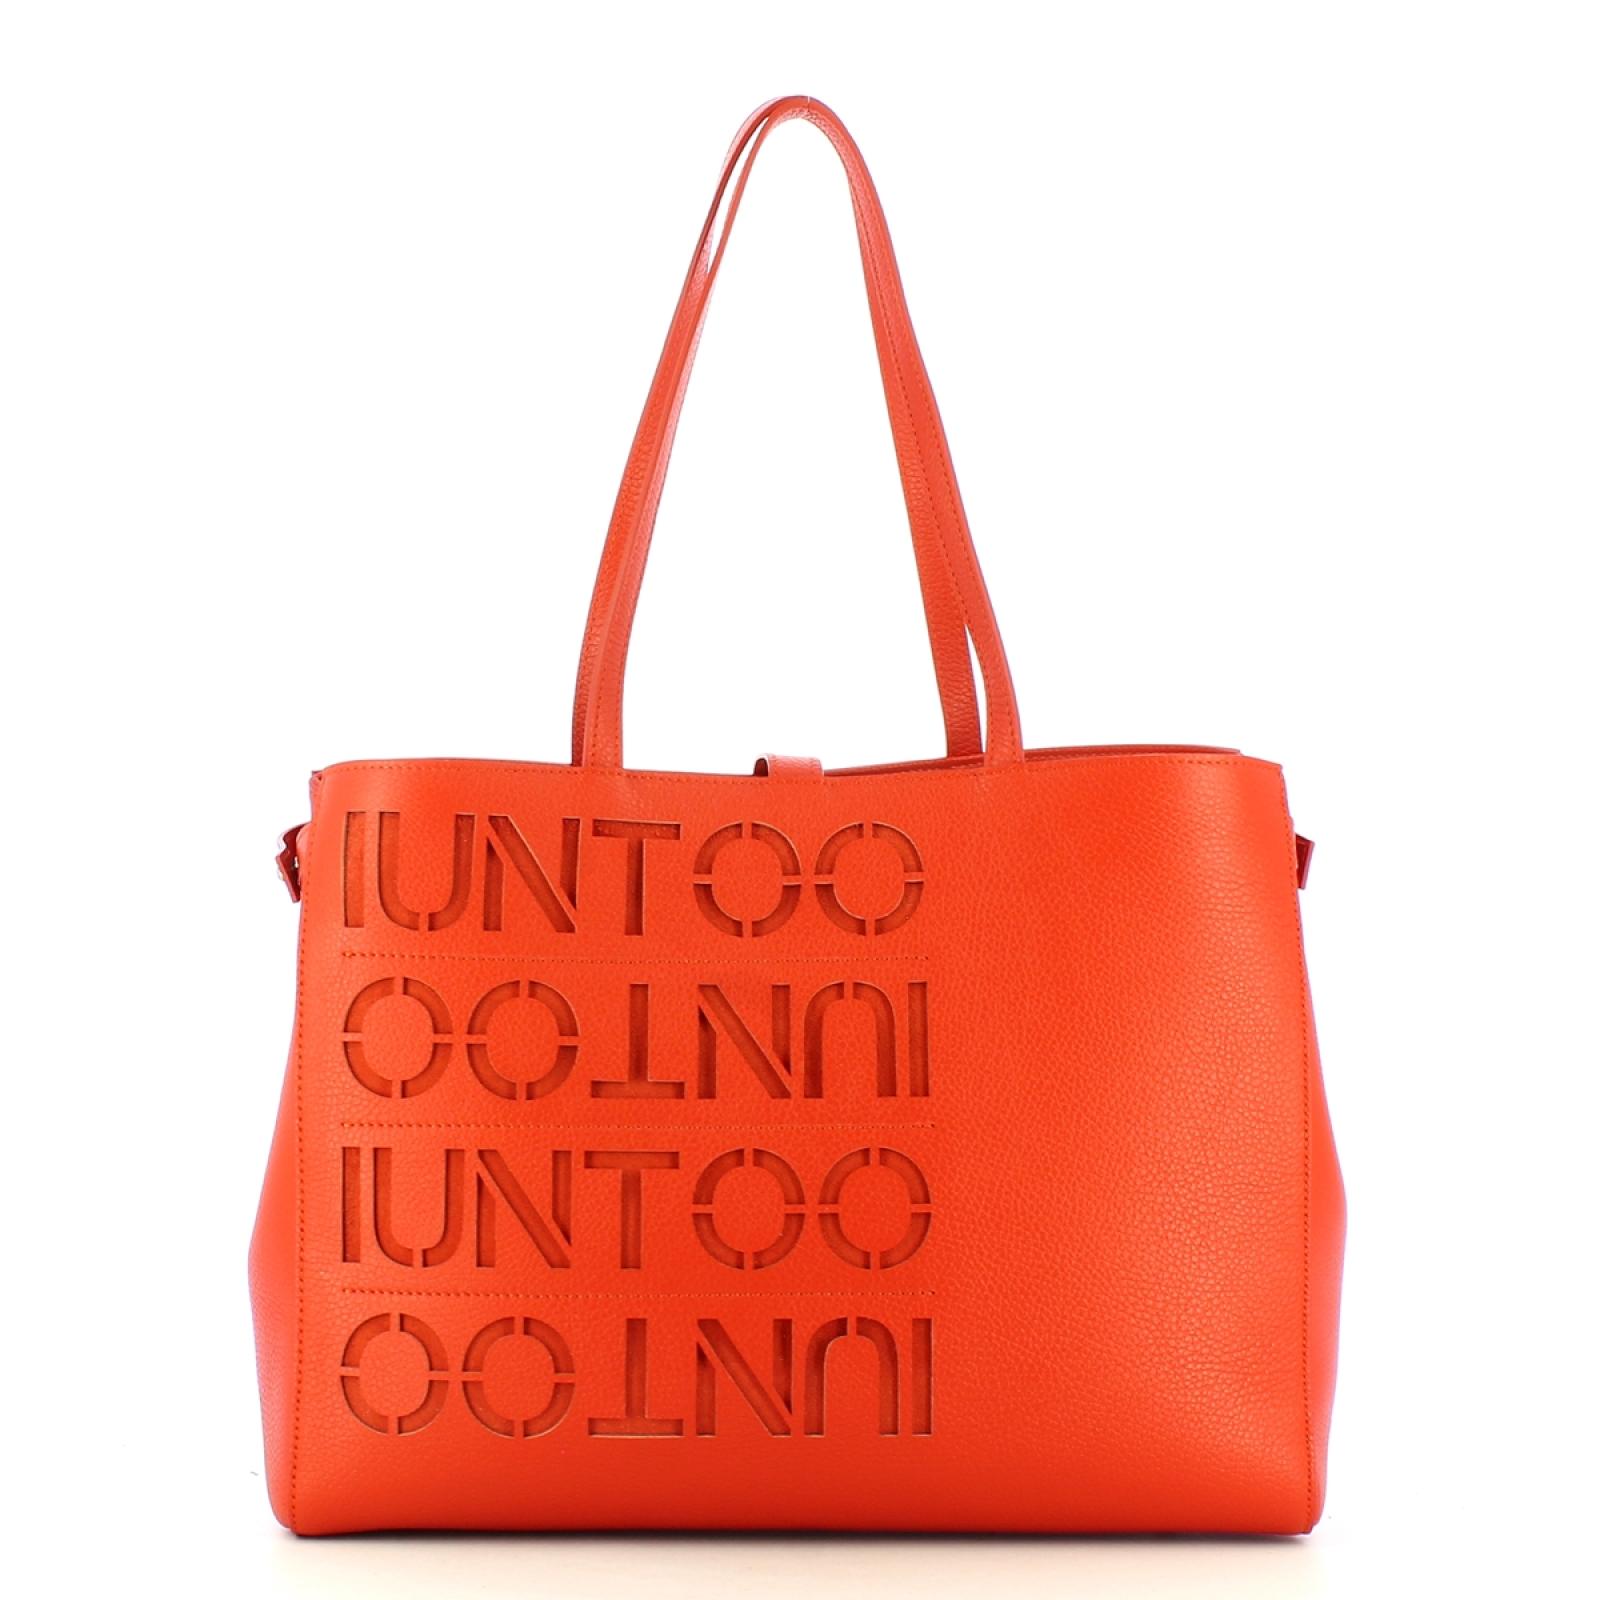 Iuntoo Shopper Media Graziosa con logo Arancio - 1